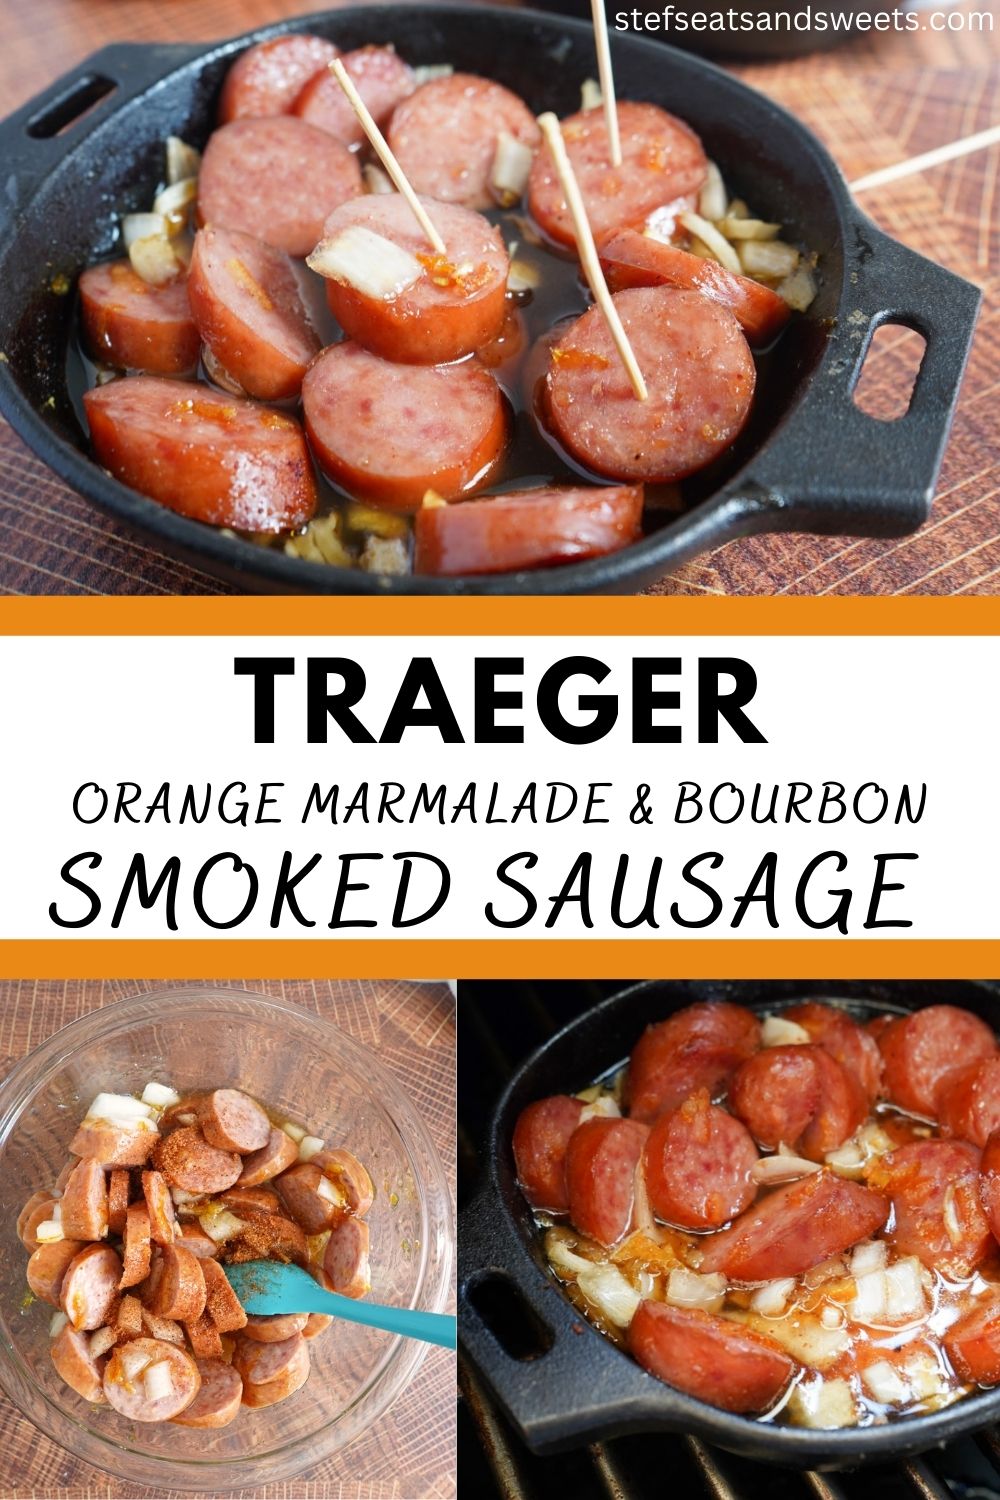 Traeger smoked sausage with bourbon